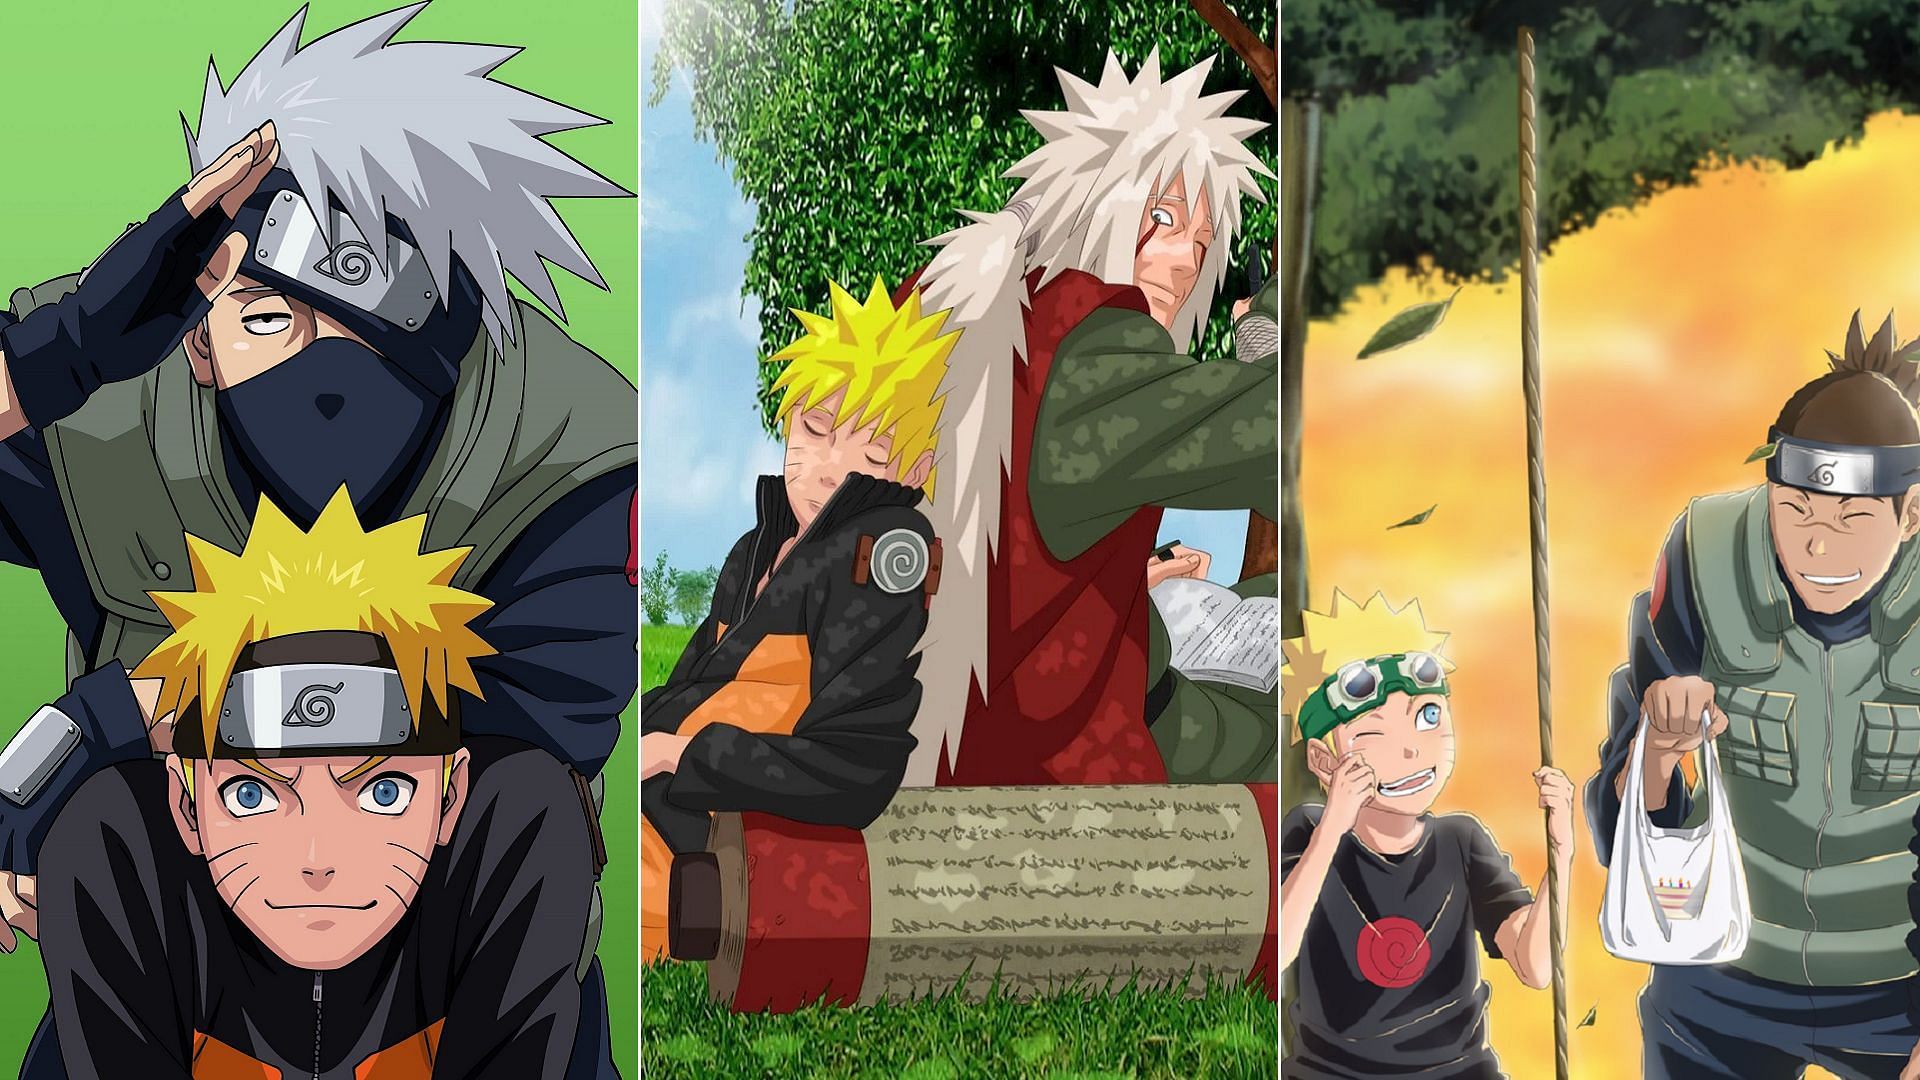 The bond between Naruto Uzumaki and his sensei is heartwarming (Image via Studio Pierrot)